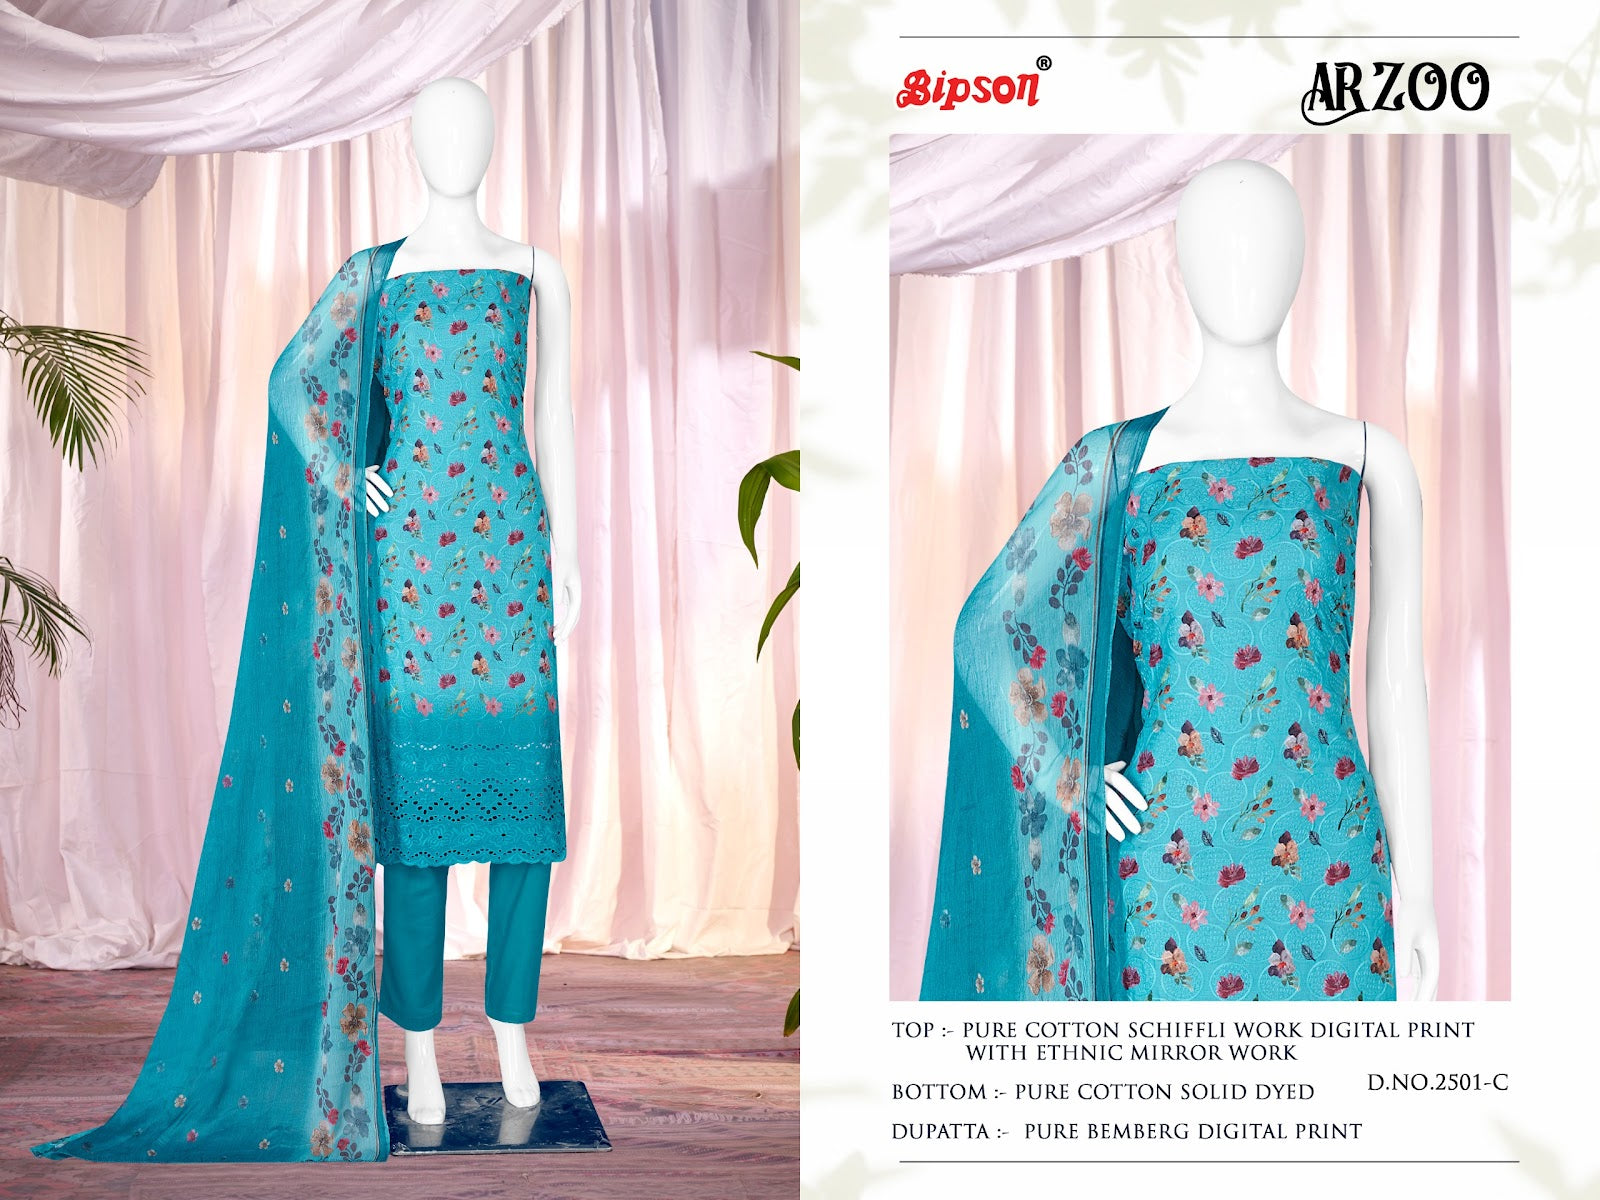 Arzoo 2501 Bipson Prints Cotton Pant Style Suits